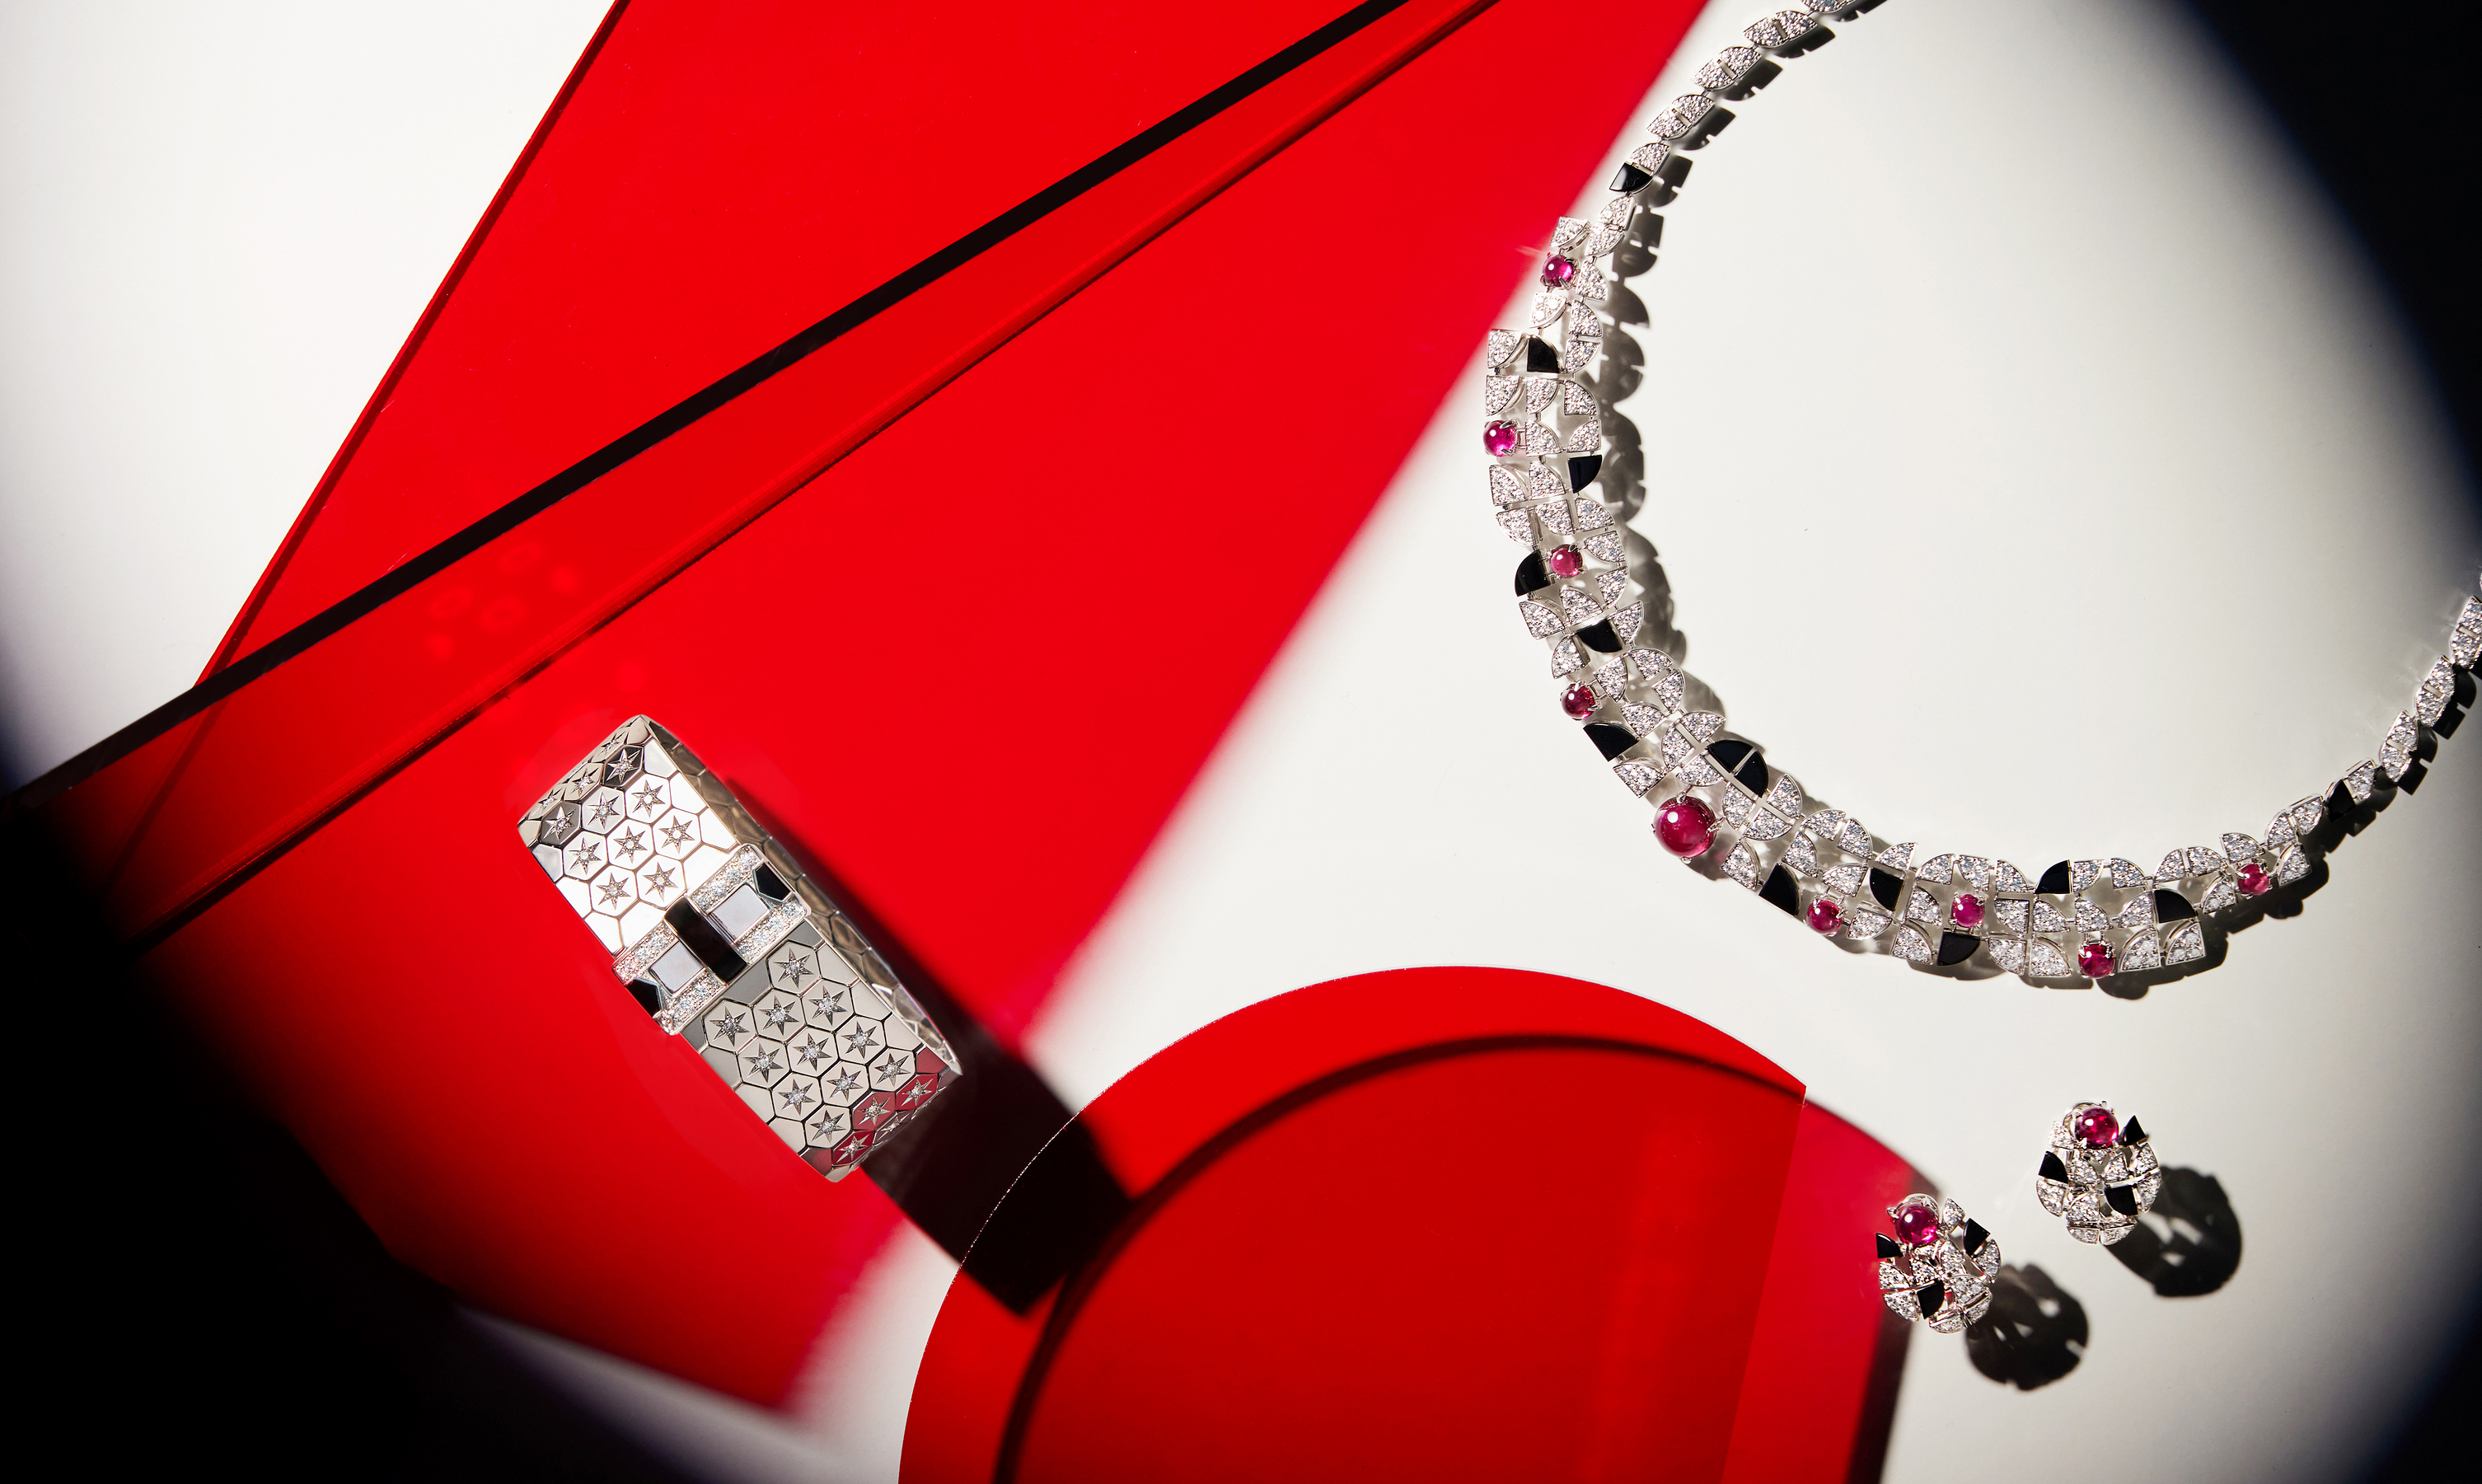 Van Cleef & Arpels Ludo 系列白 K 金、縞瑪瑙和鑽石手鐲。Cartier 頂級珠寶 Beautés du Monde 系列 Aporia 紅碧璽、縞瑪瑙和鑽石項鍊與耳環。